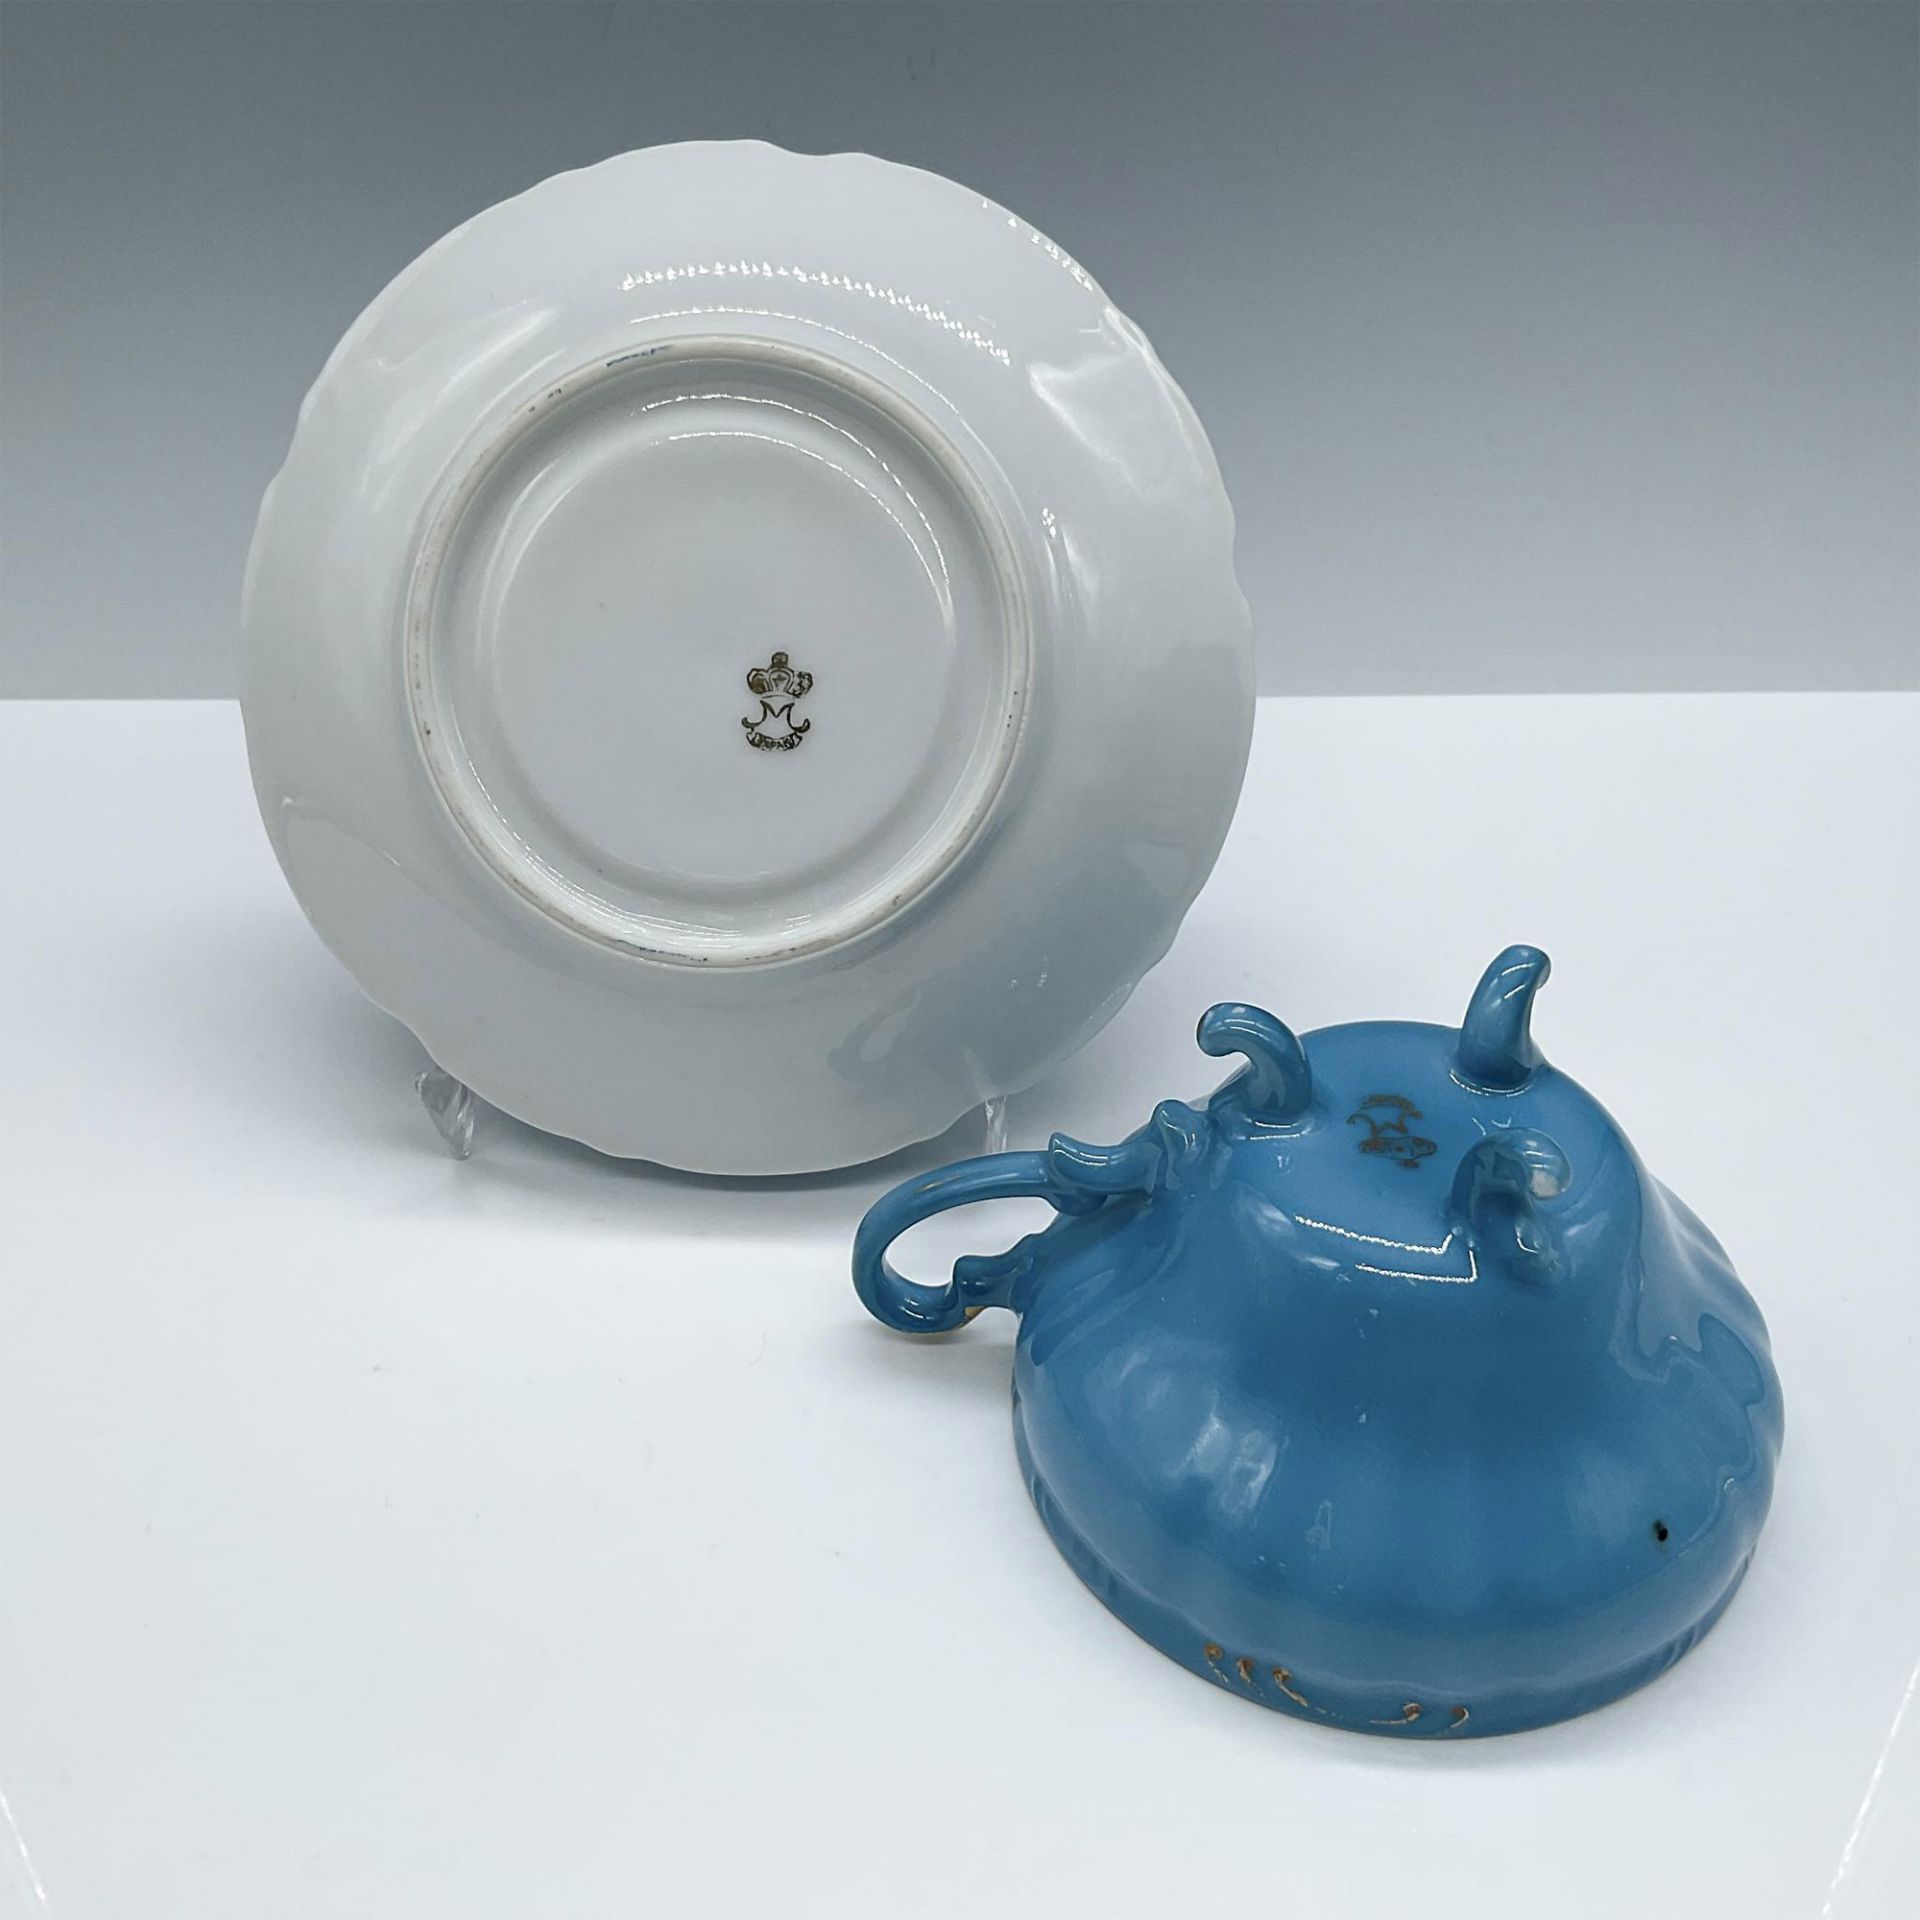 M Japan, Porcelain Tea Cup and Saucer Set - Image 3 of 3